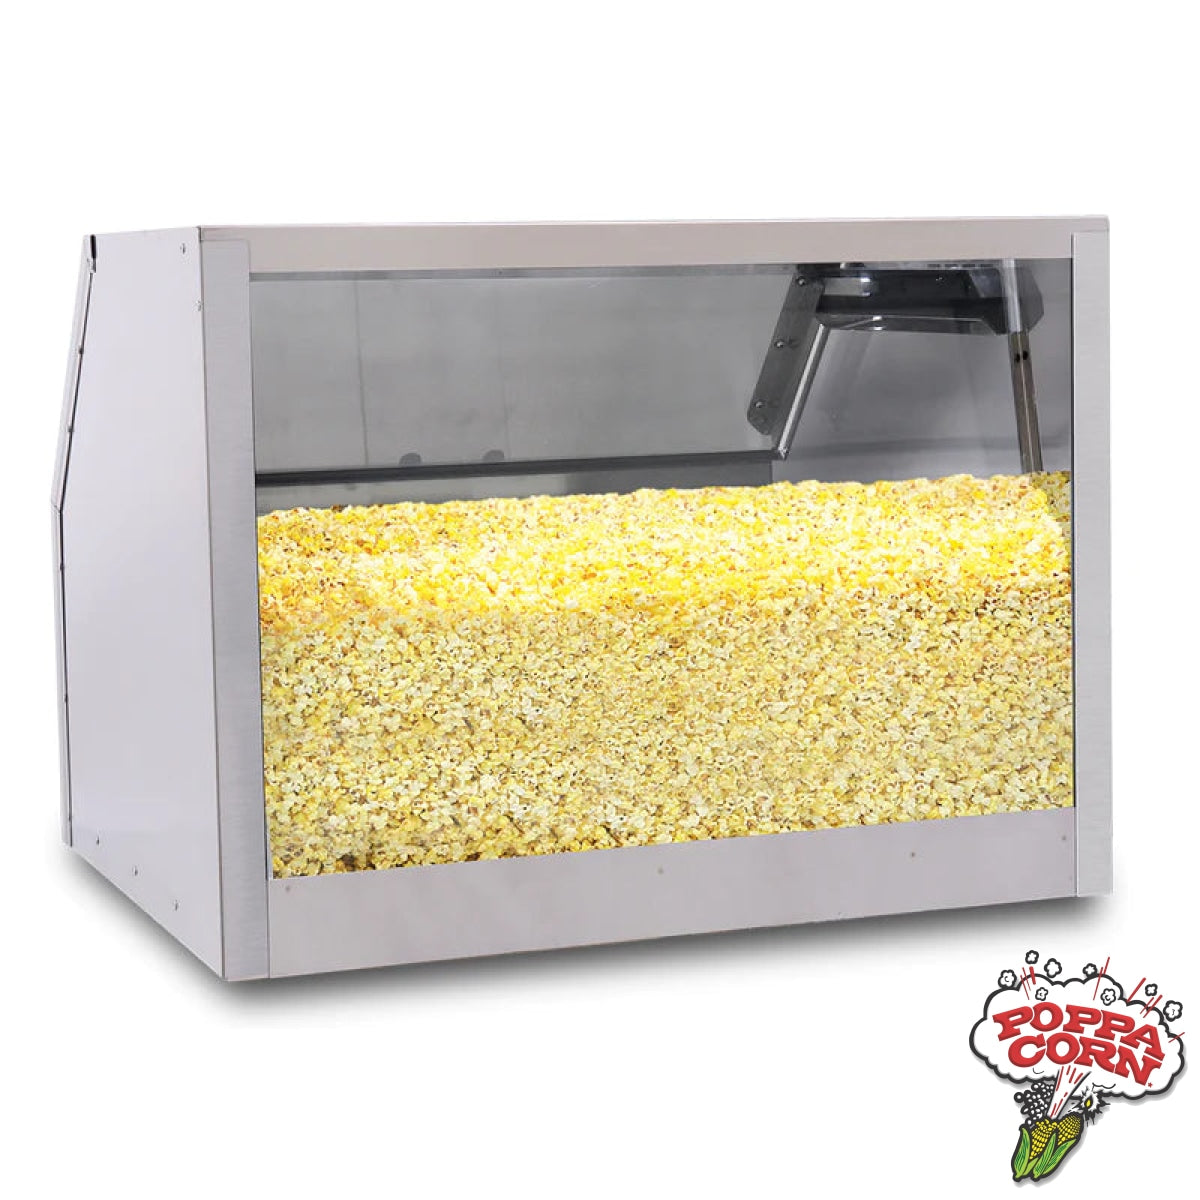 48" Main Street Elite Counter Popcorn Staging Cabinet - GM2686-00-020 - Poppa Corn Corp